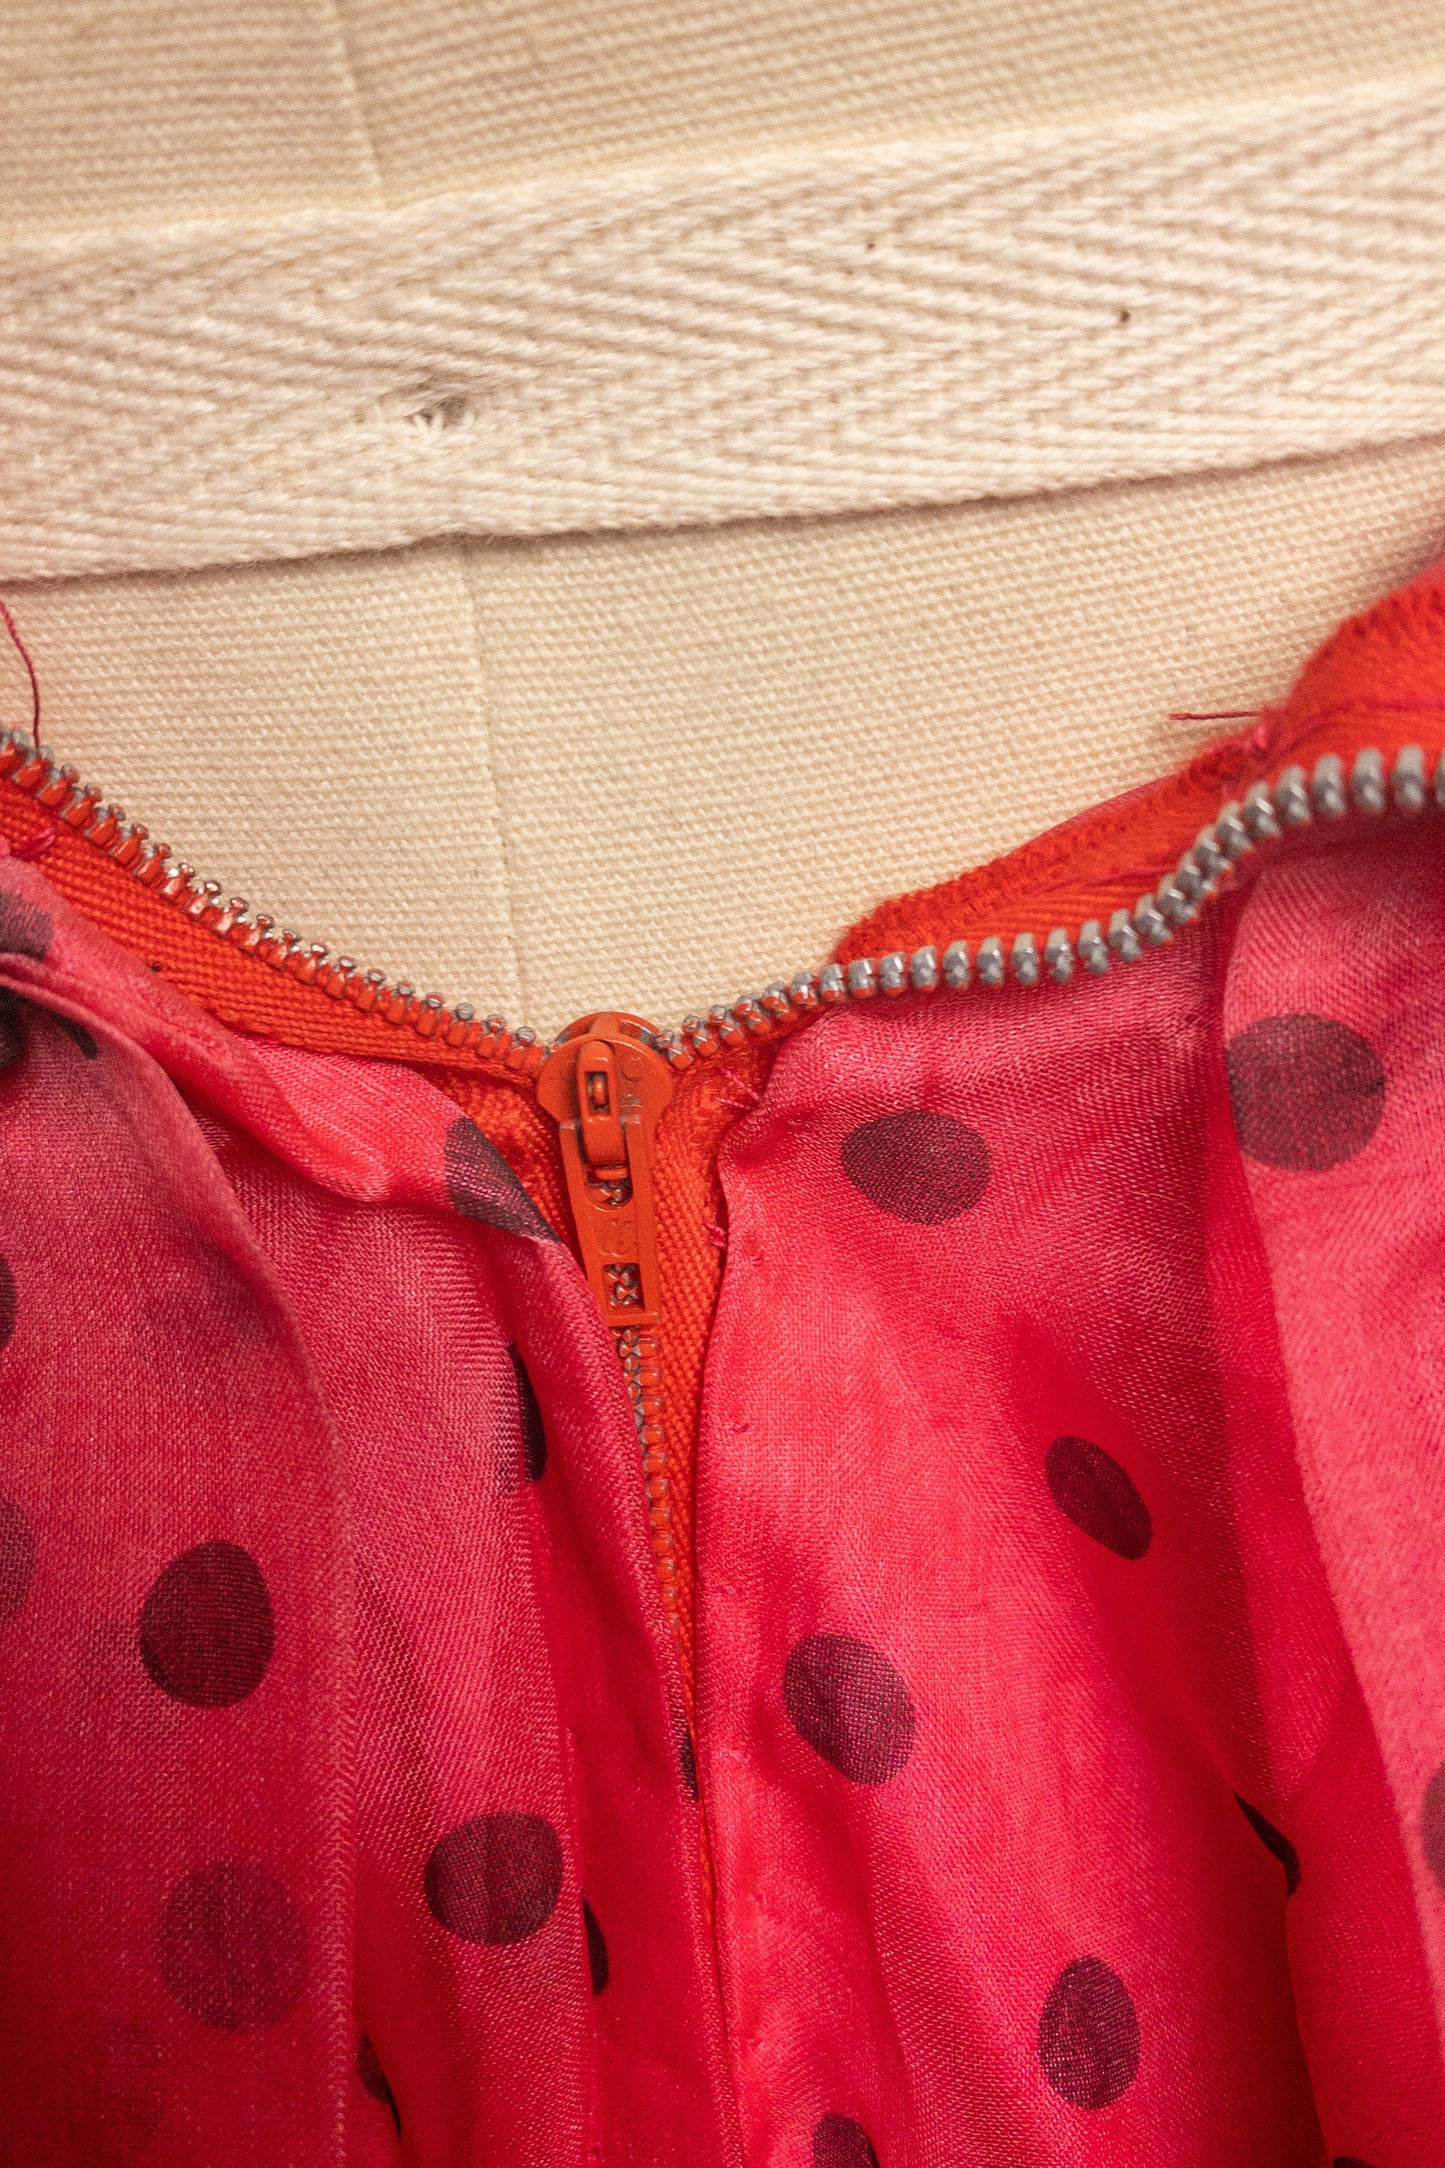 80's Magenta Pink Polka Dot Ruffle Gown | XXS/XS